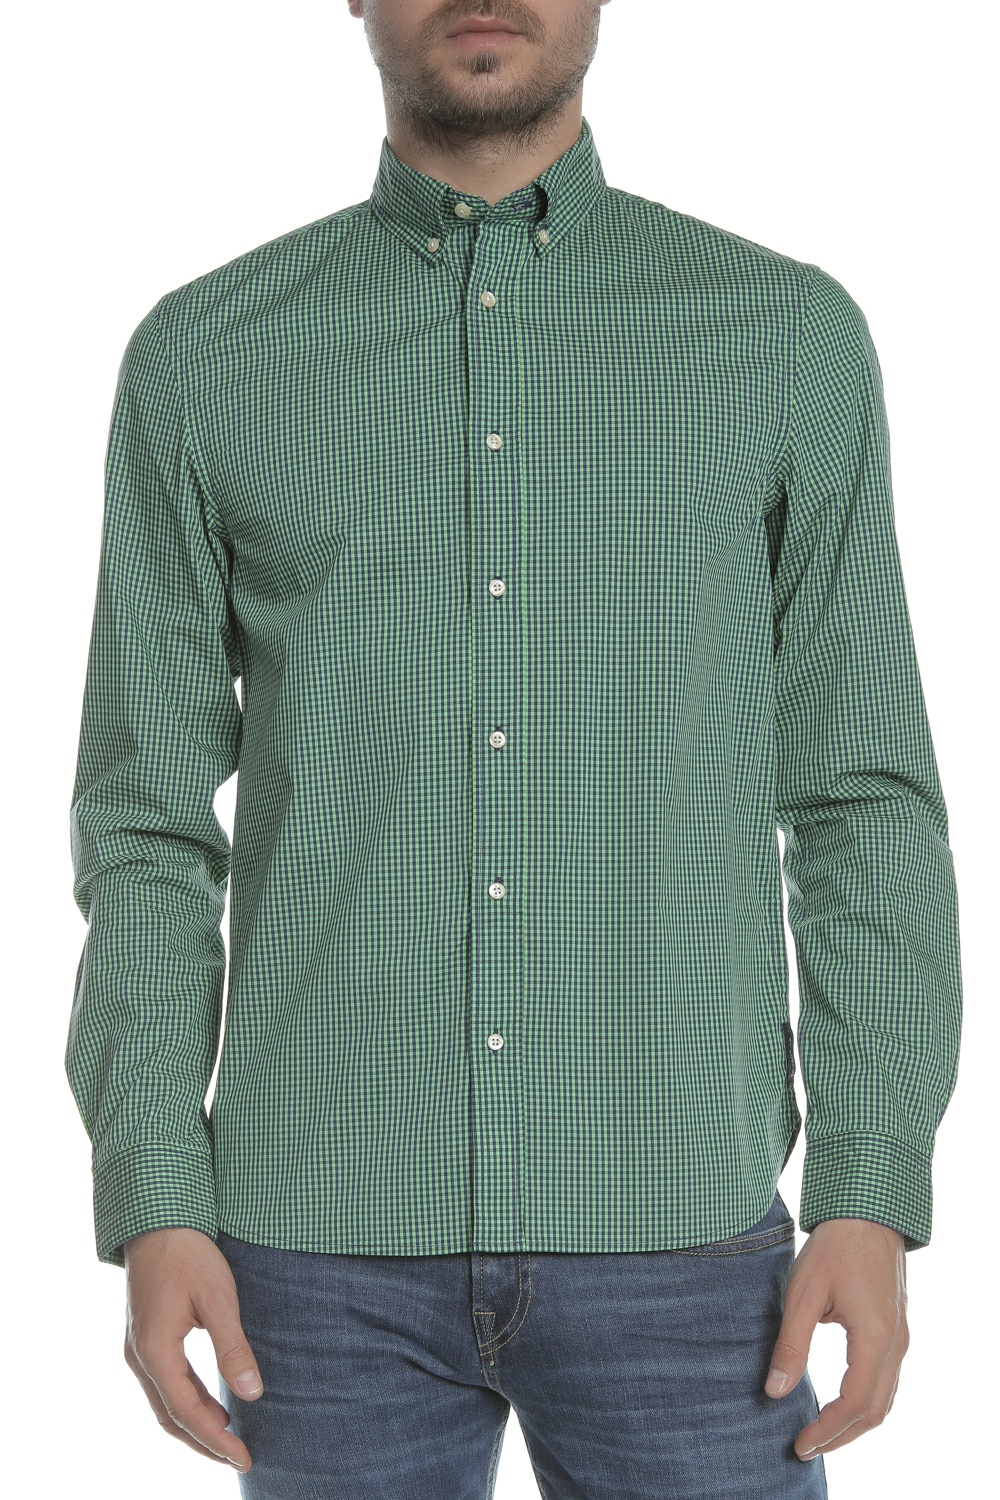 SCOTCH & SODA - Ανδρικό πουκάμισο REGULAR FIT - Classic BB-check πράσινο